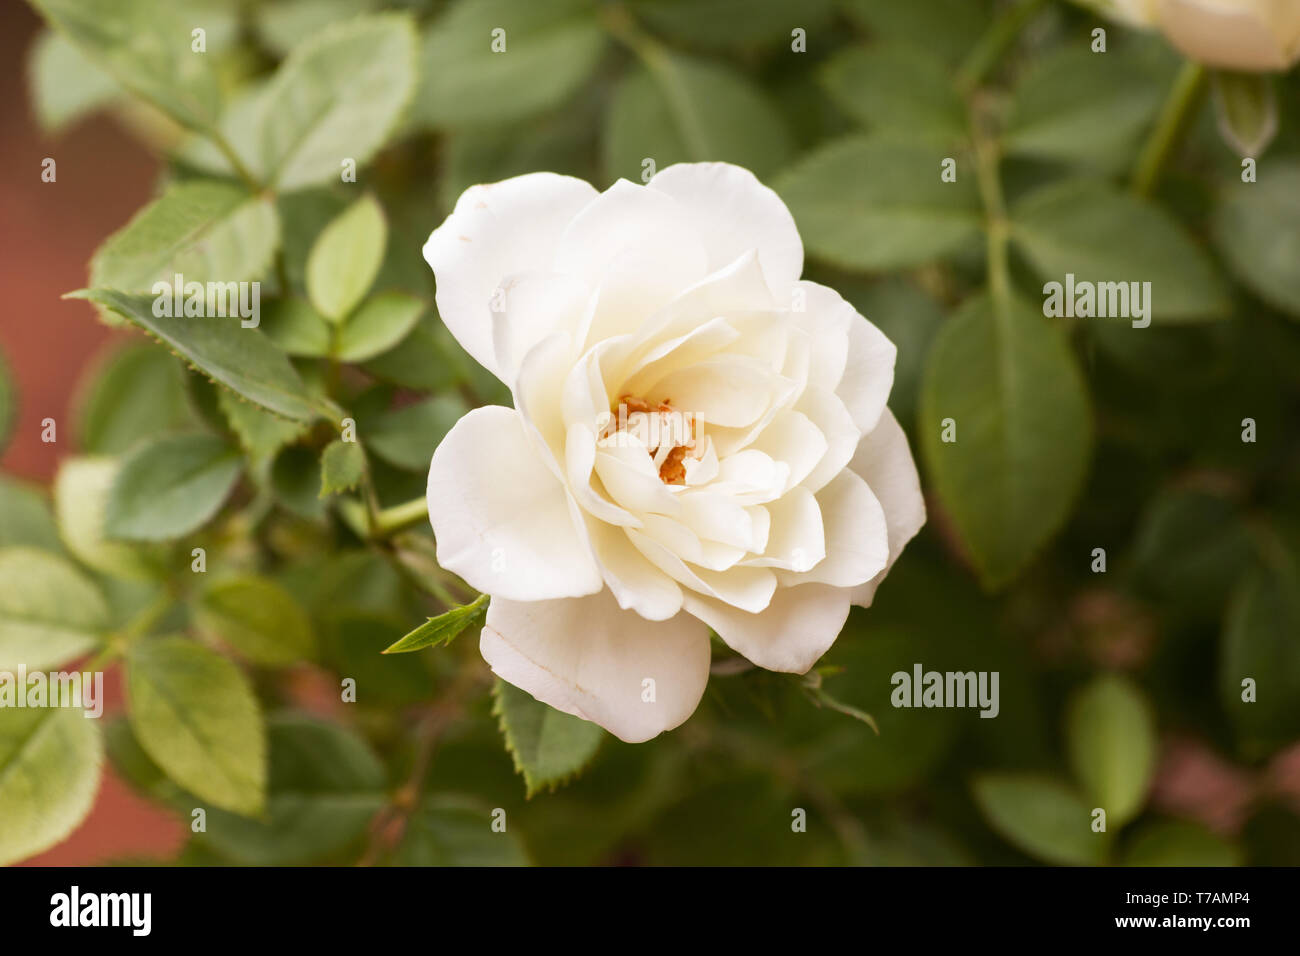 White rose close up Stock Photo